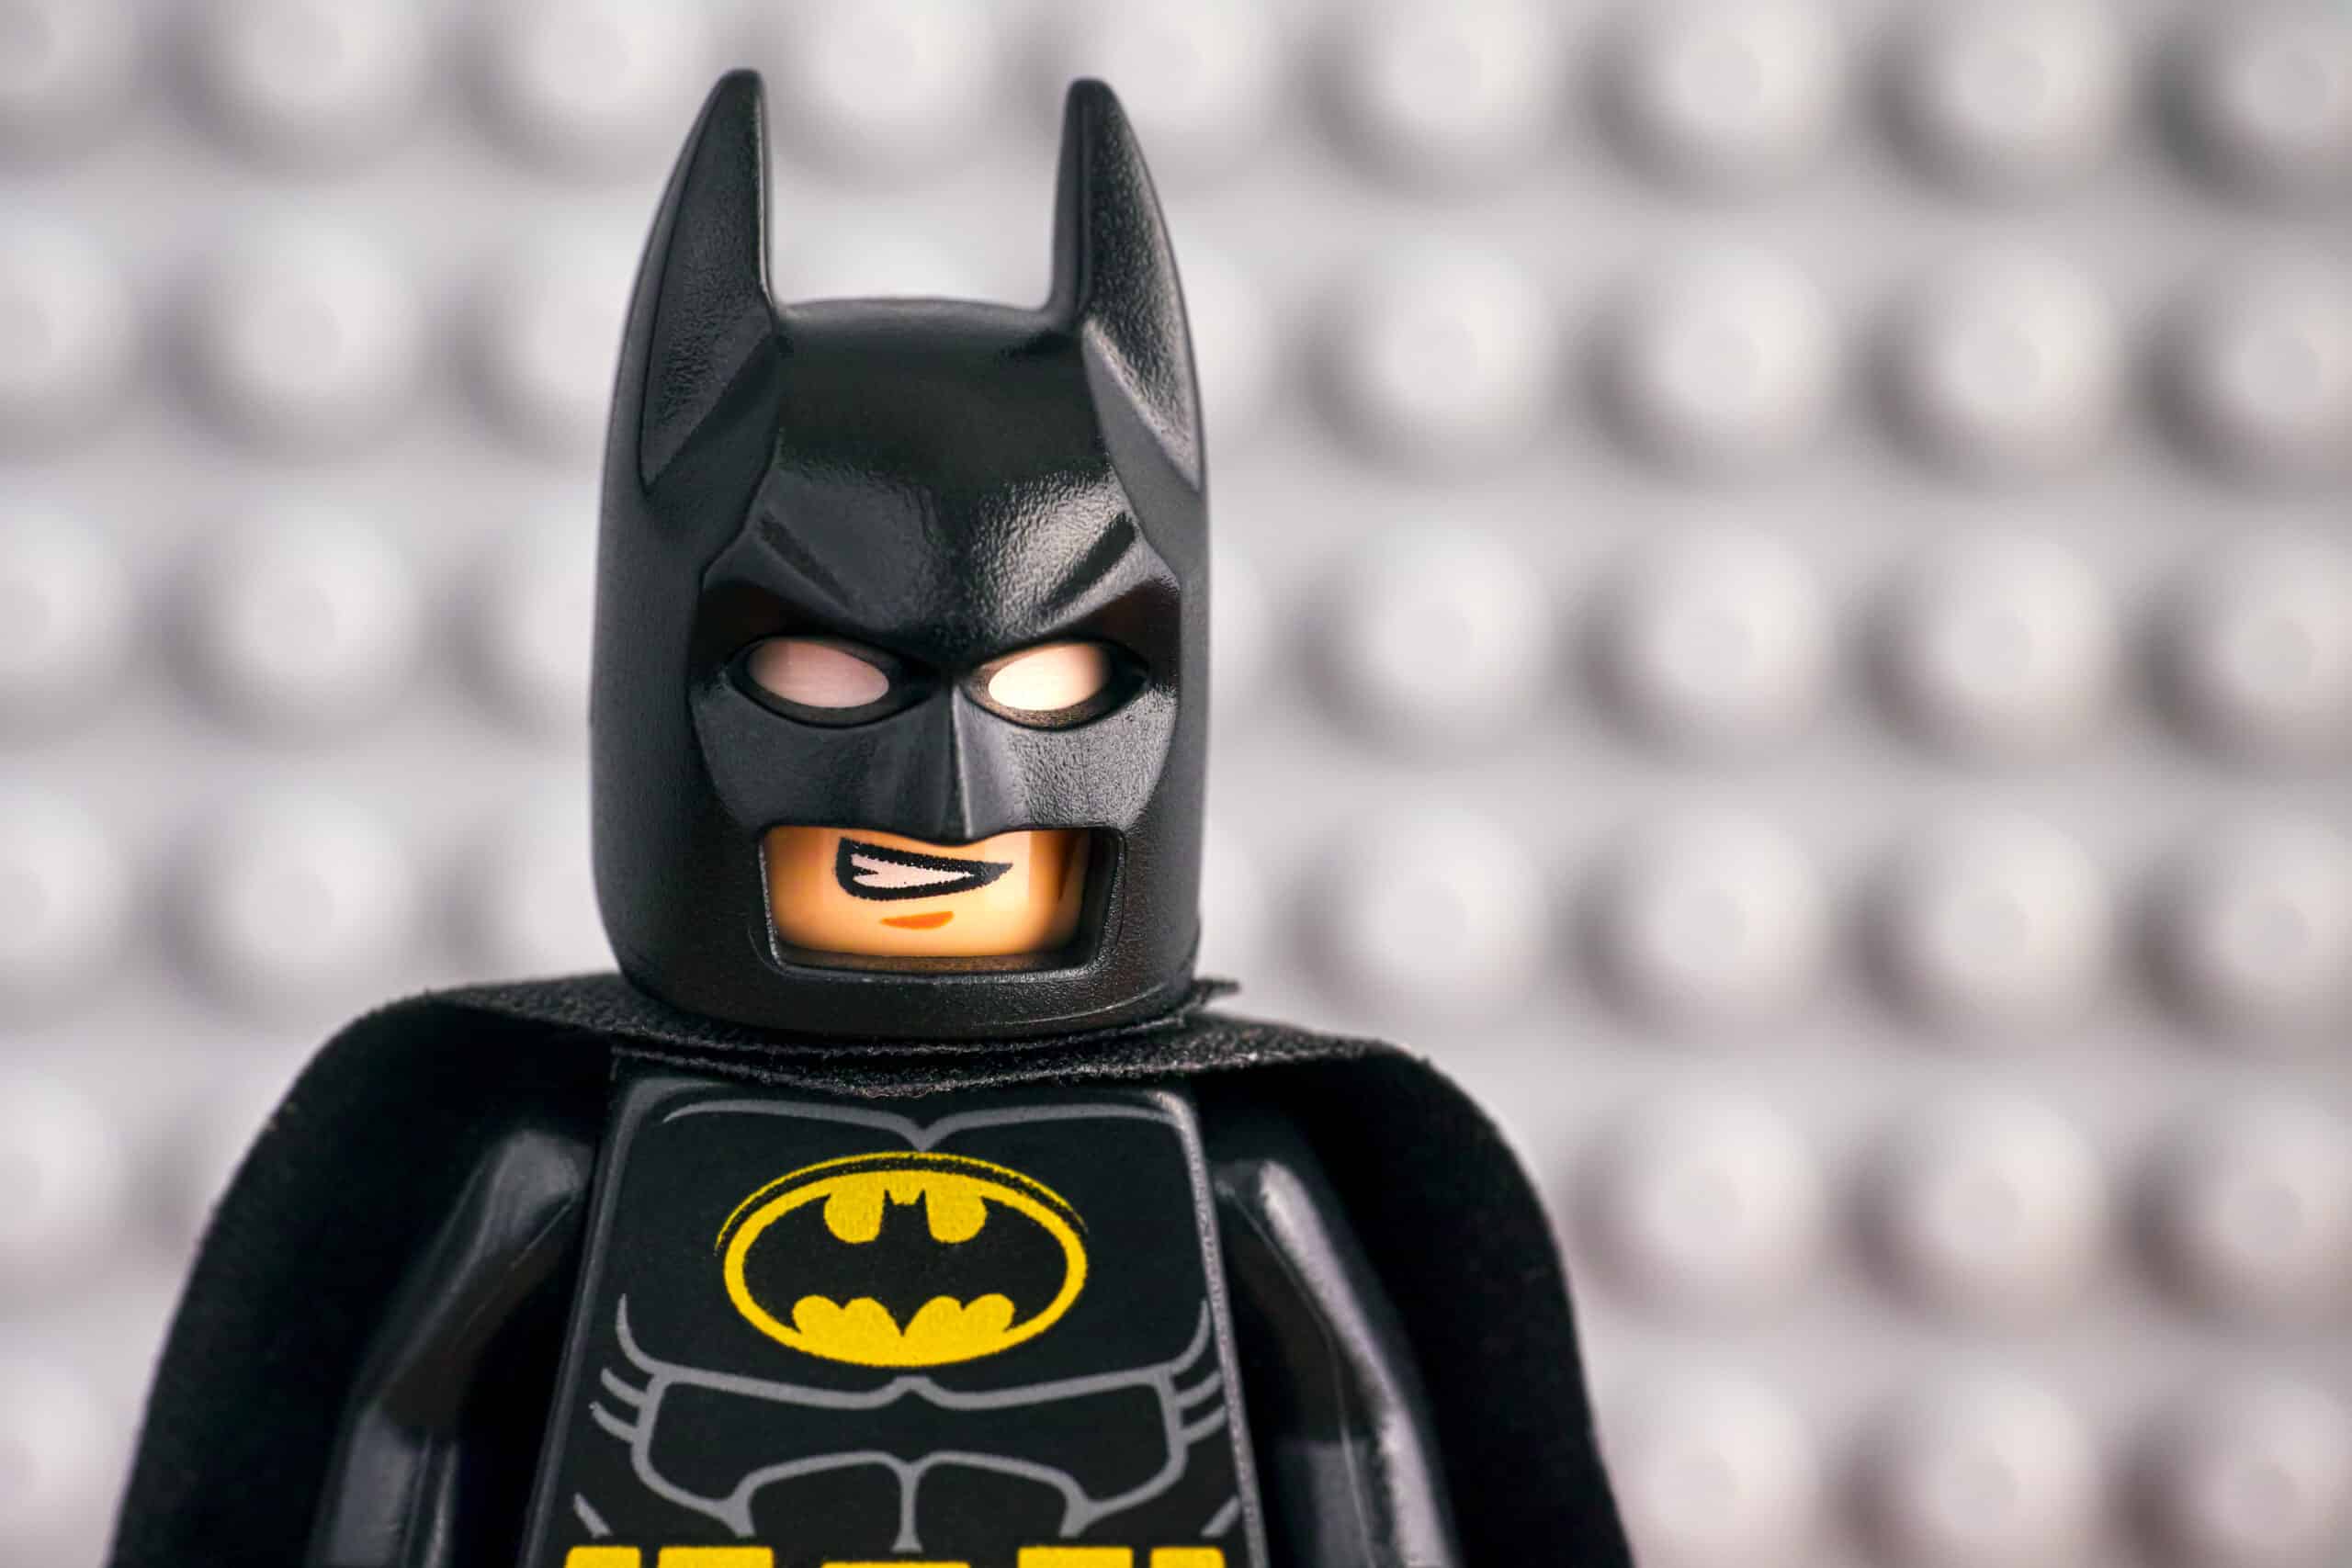 DC Super Heroes LEGO Batman Bruce Wayne Classic TV Series Minifigure 7